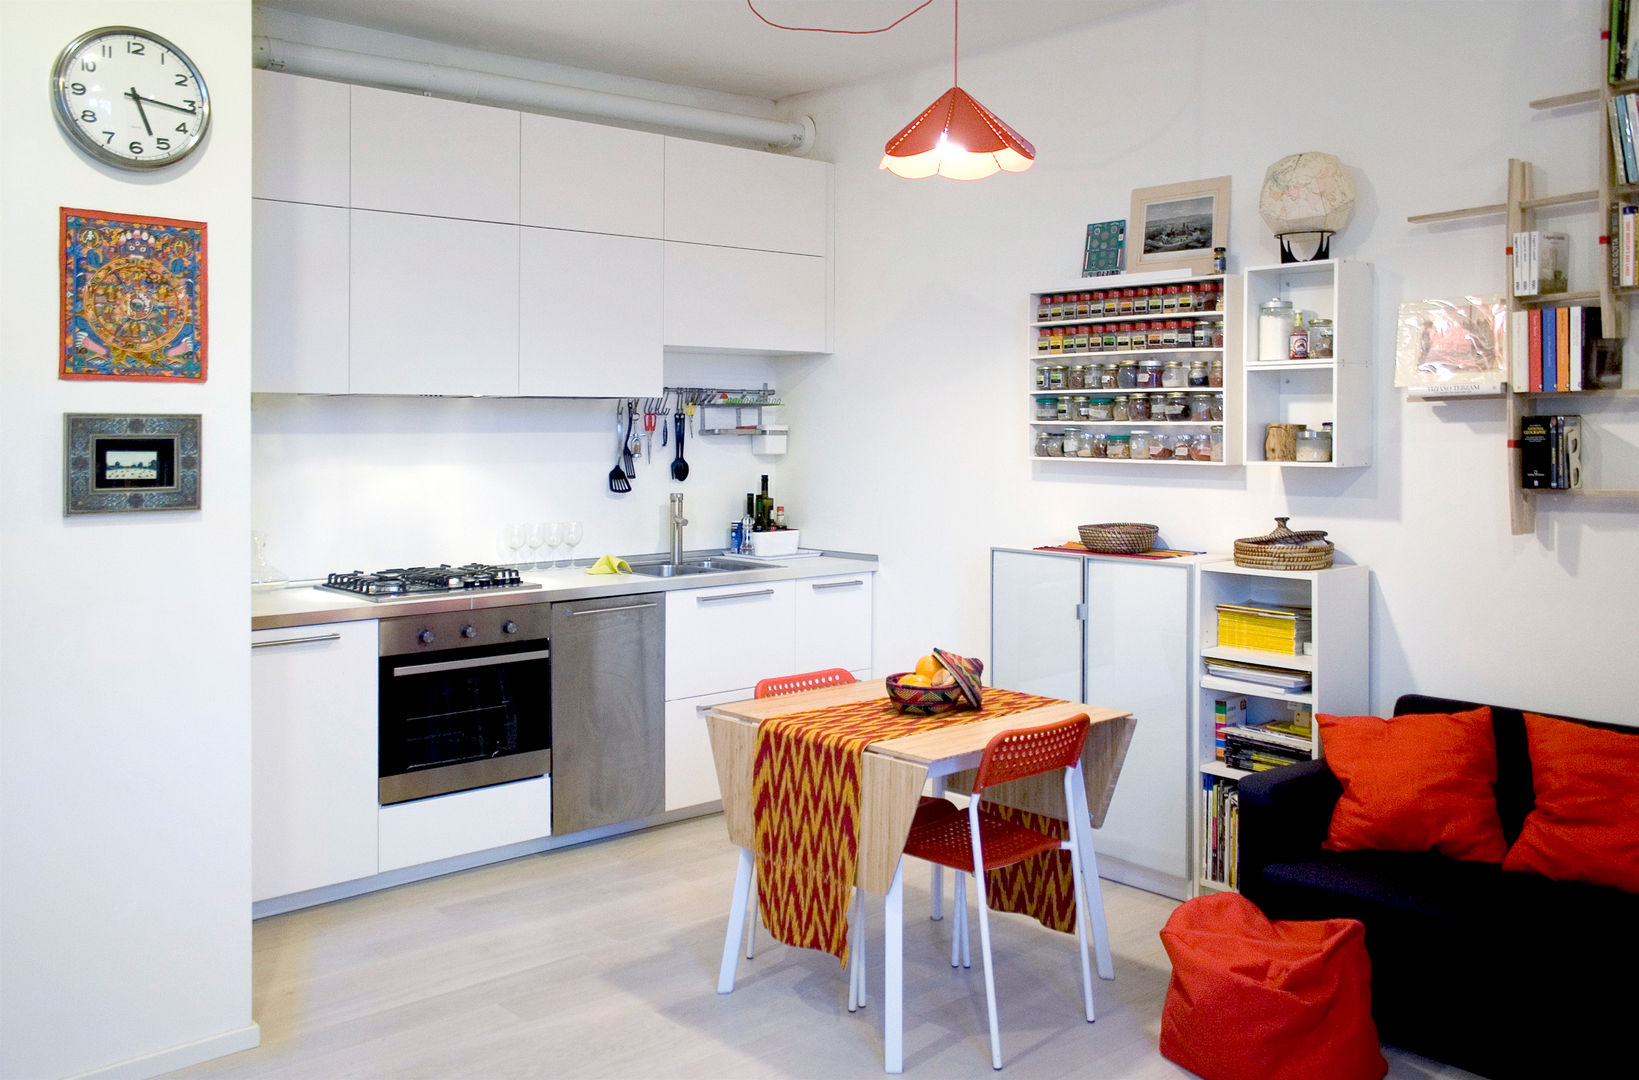 HOUSE F, M N A - Matteo Negrin M N A - Matteo Negrin Cocinas de estilo minimalista